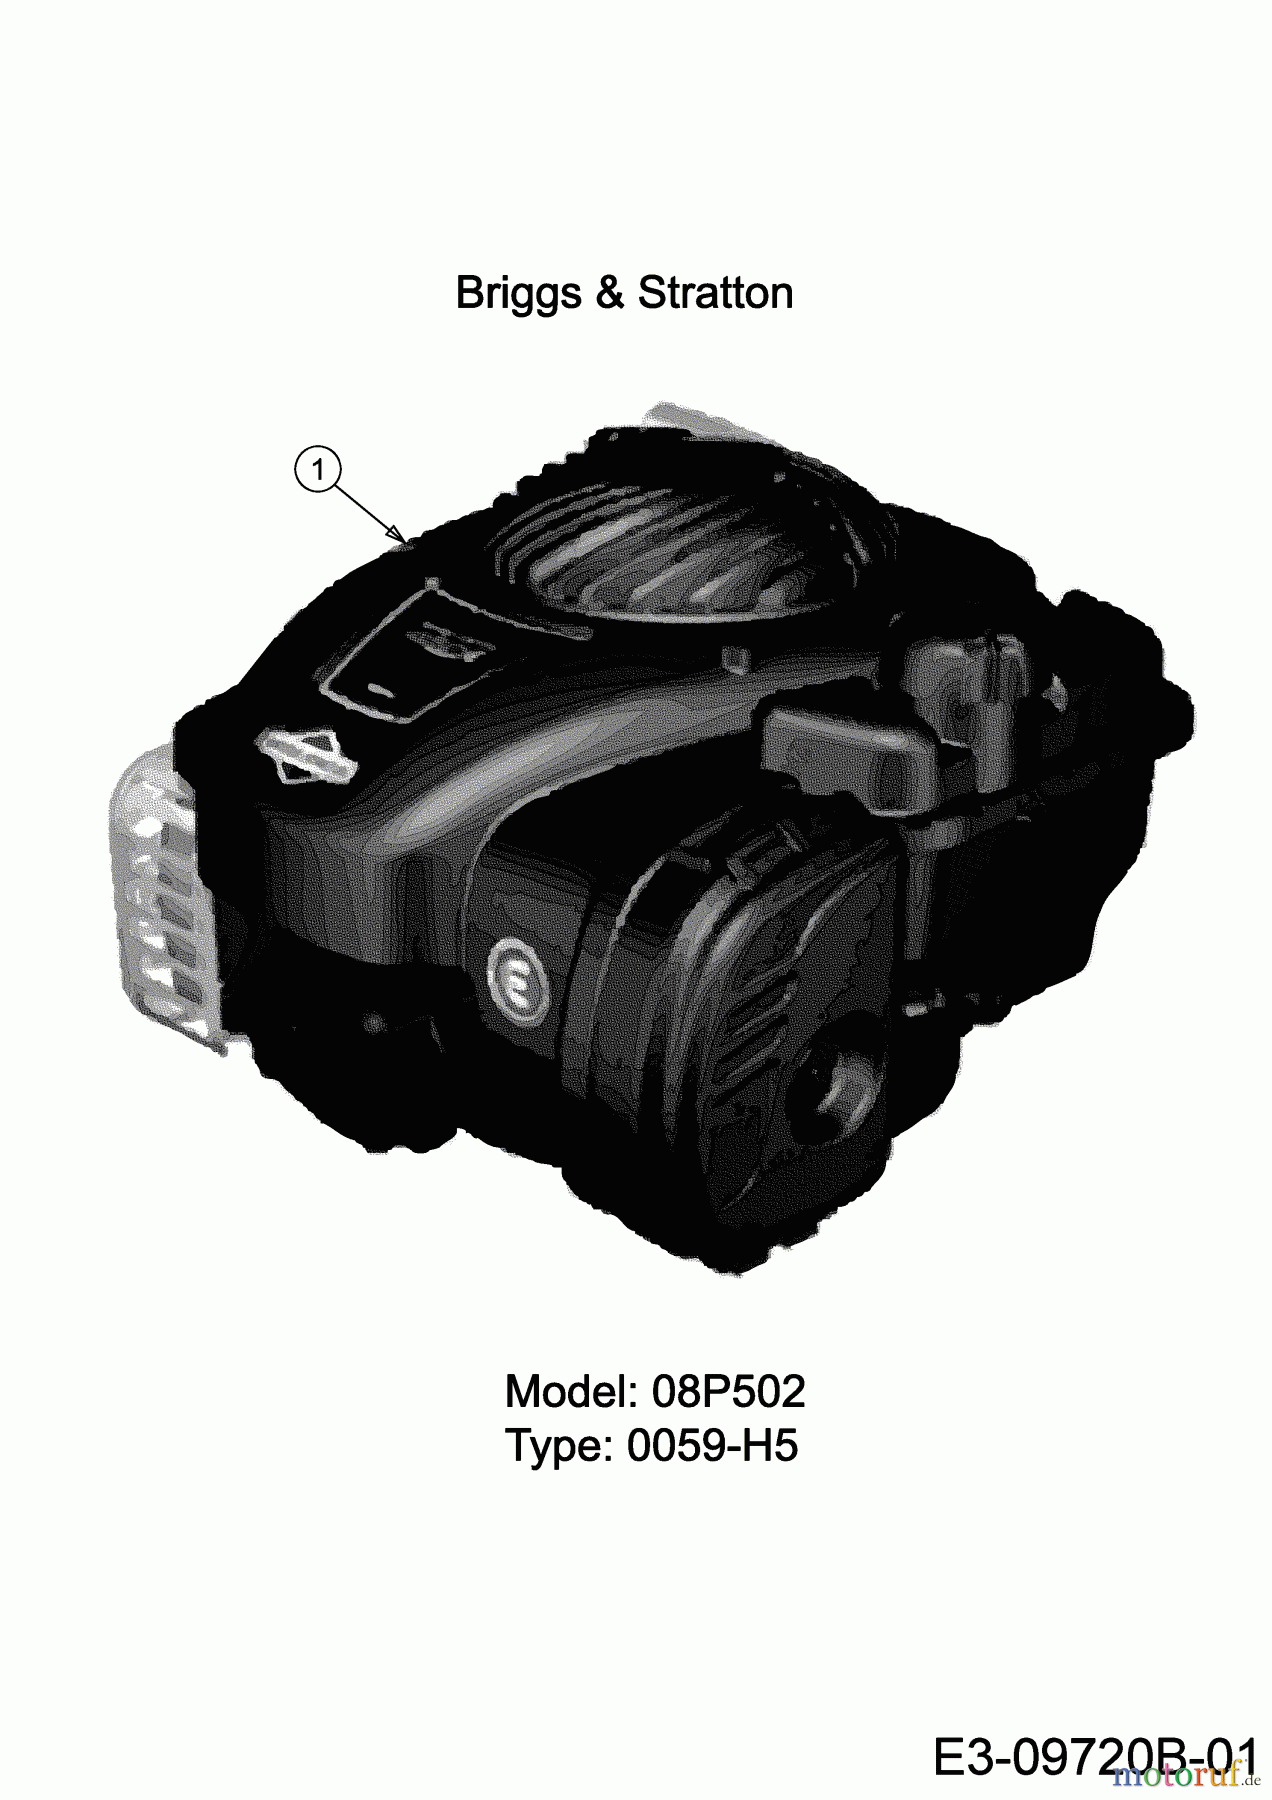  MTD Motormäher 51 BC 11E-025J600 (2020) Motor Briggs & Stratton